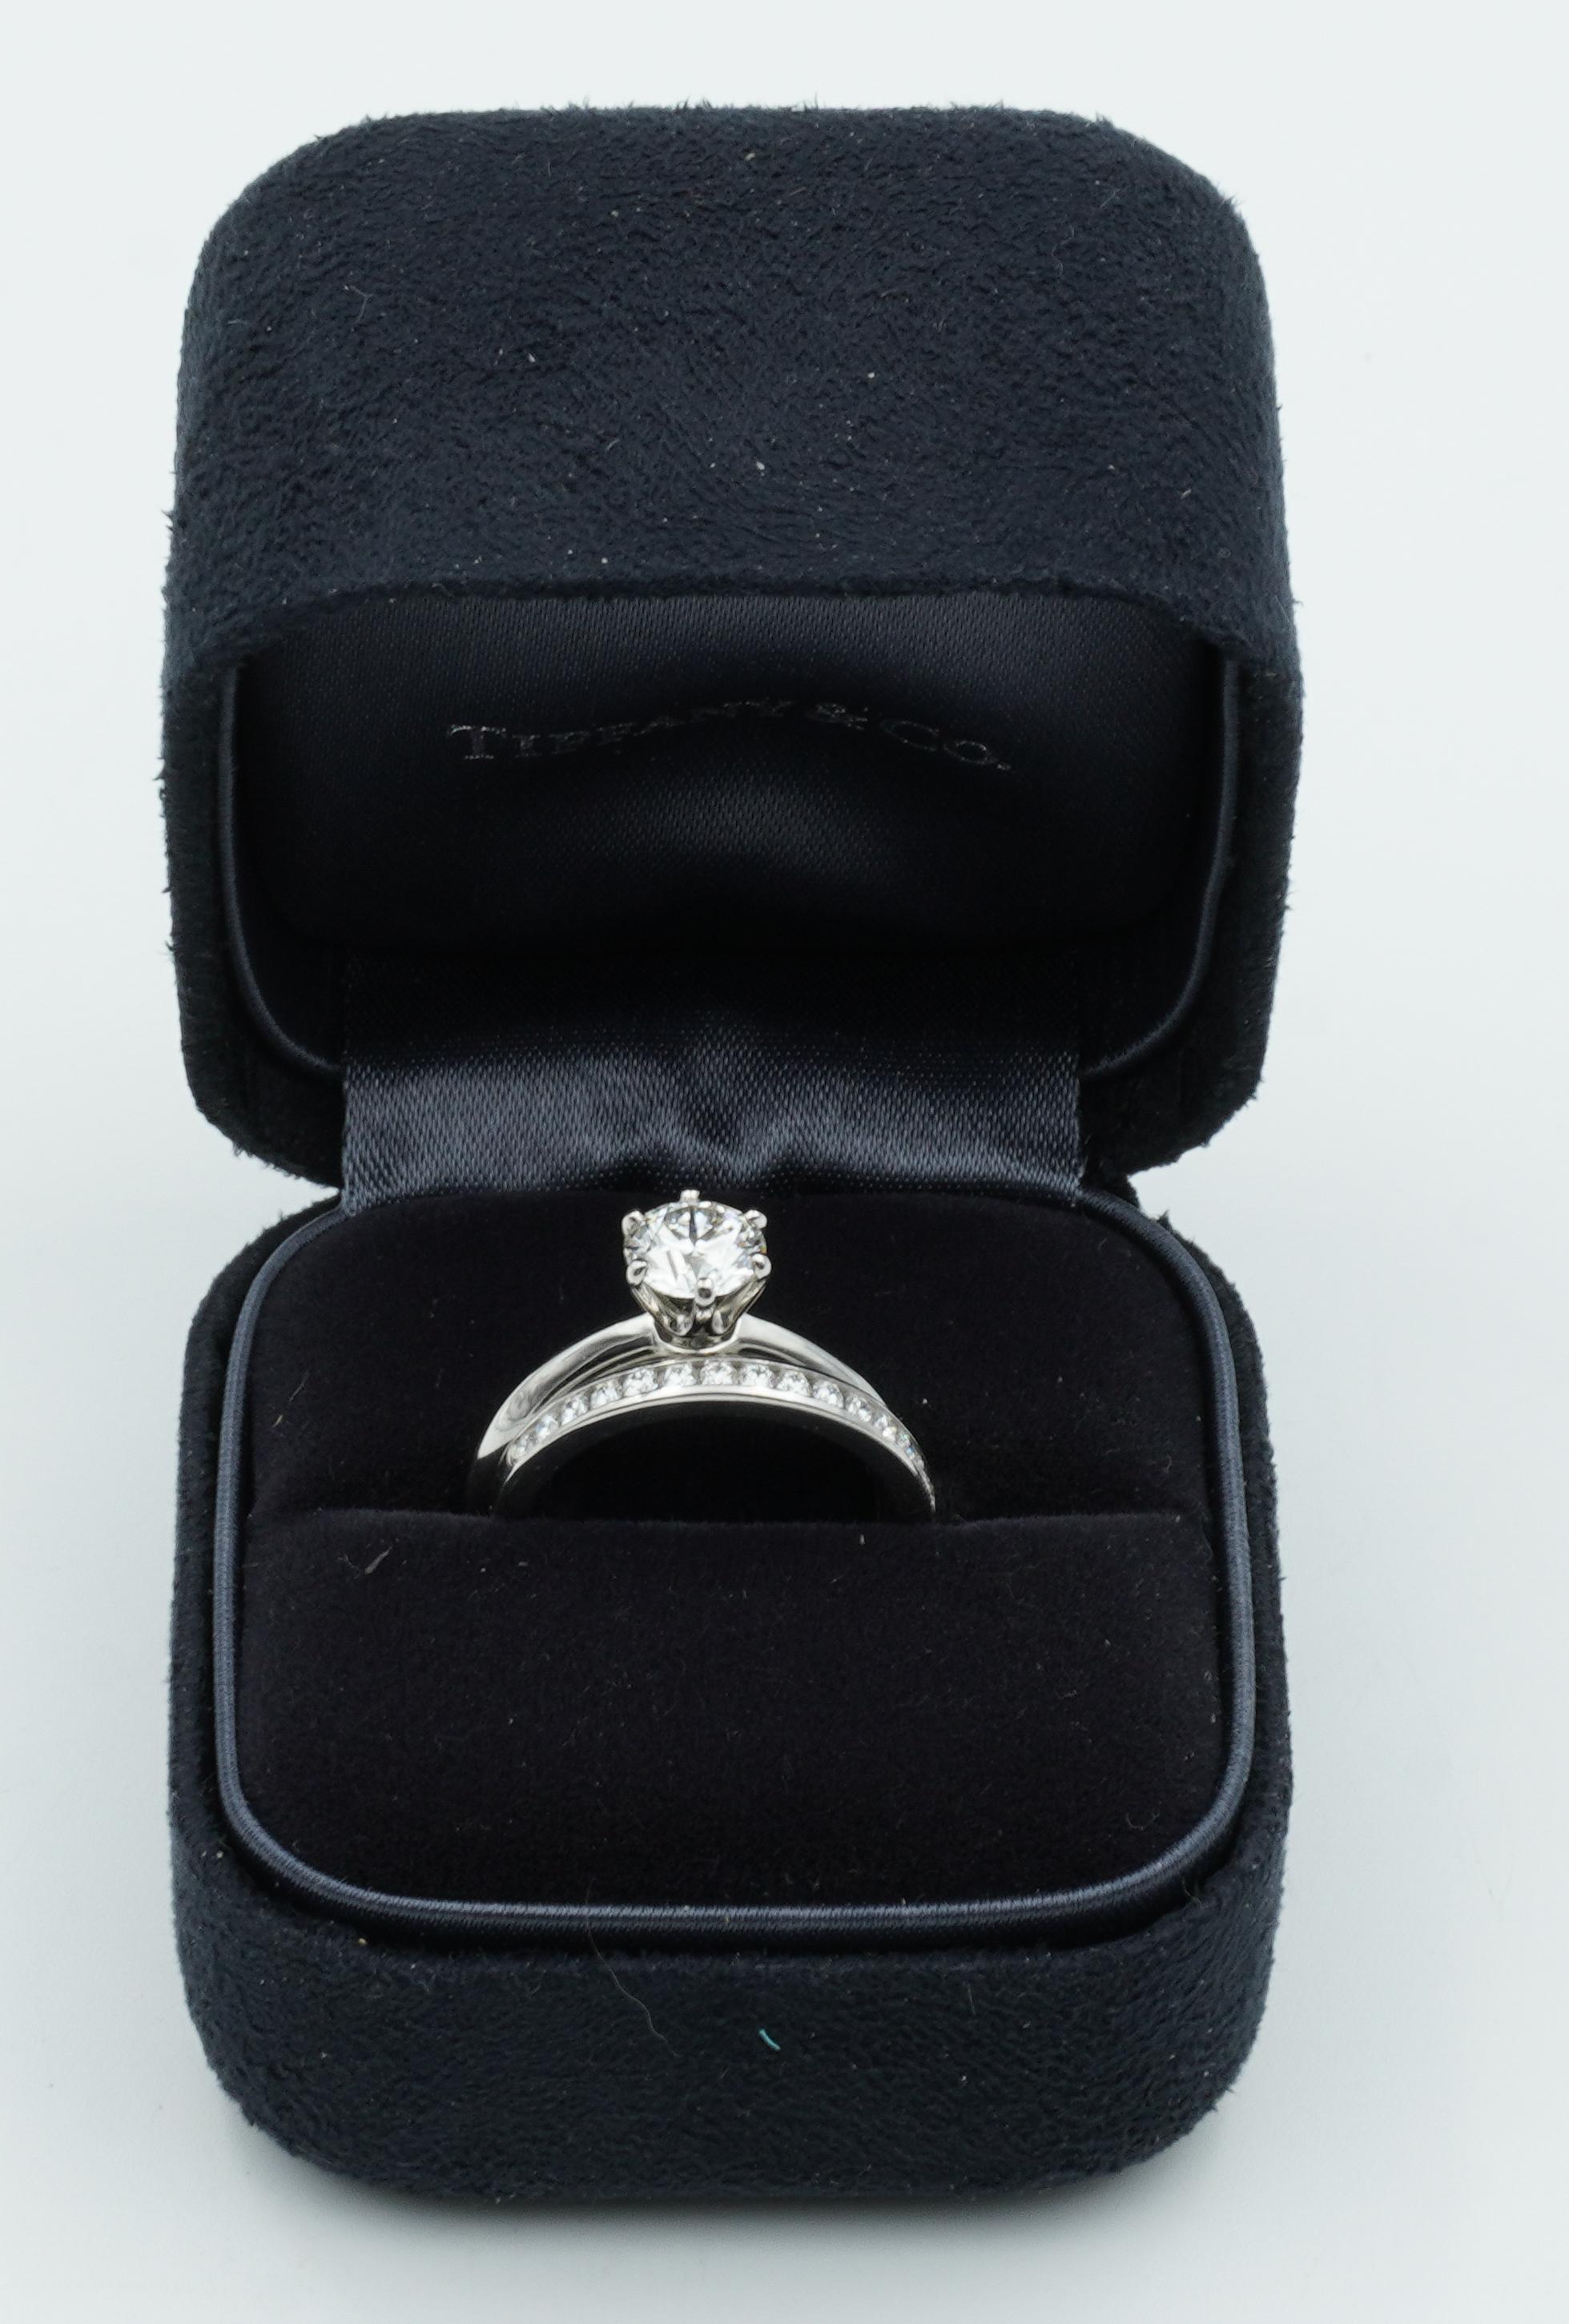 Tiffany & Co. 1.54 Ctw Diamond Engagement Ring Set in Platinum w. Box 4